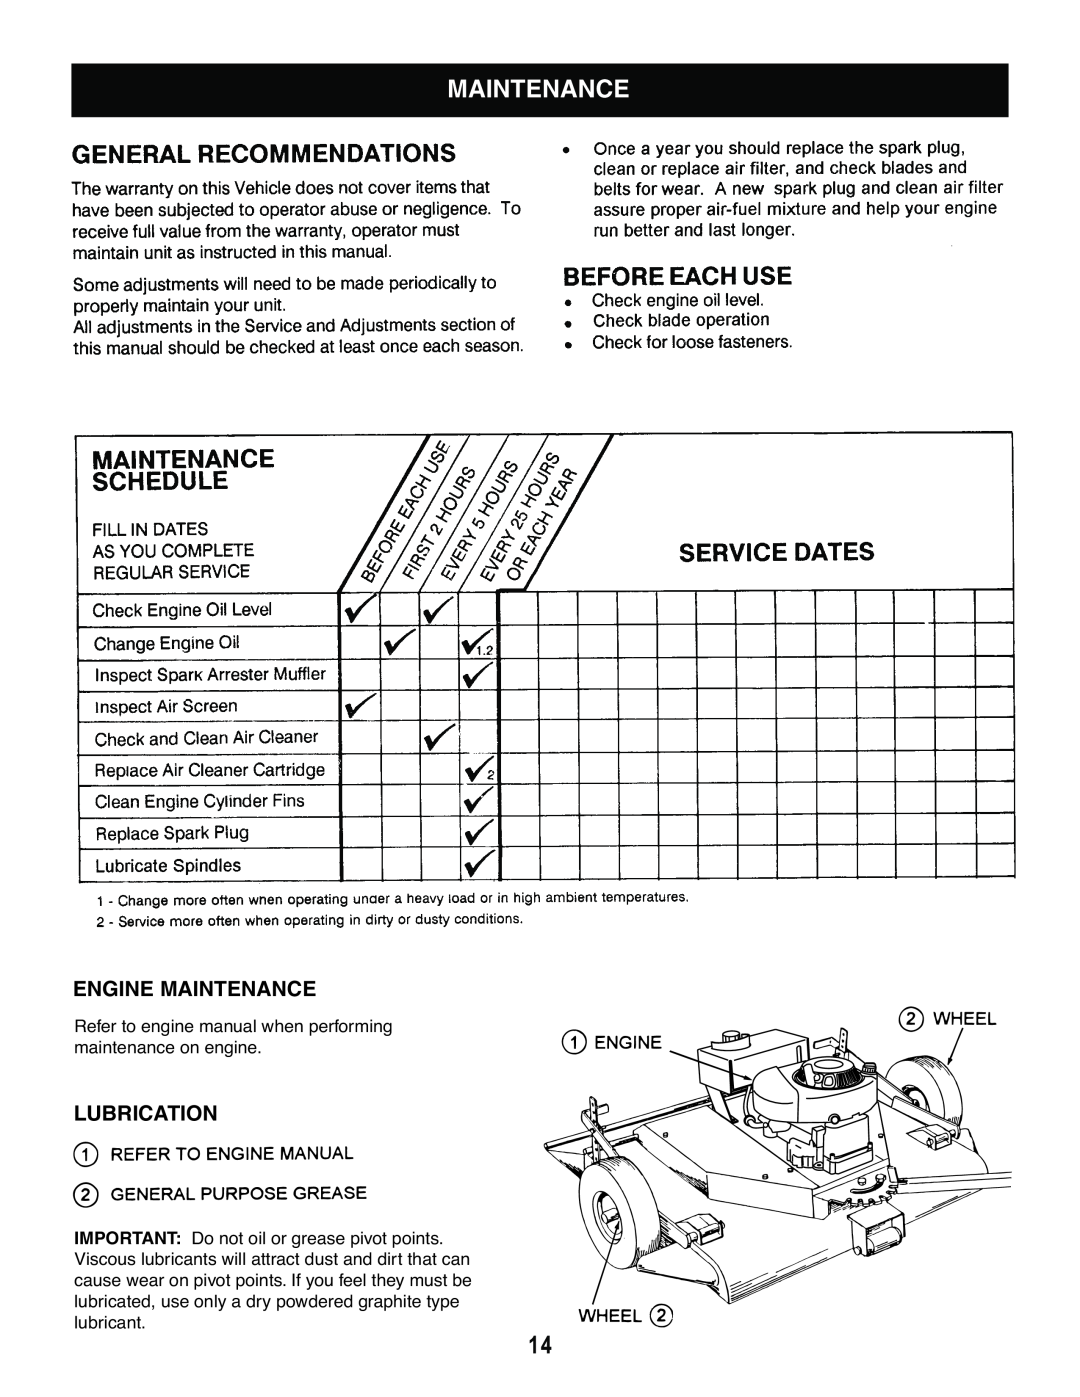 Craftsman 486.243292 owner manual Engine Maintenance, Lubrication 